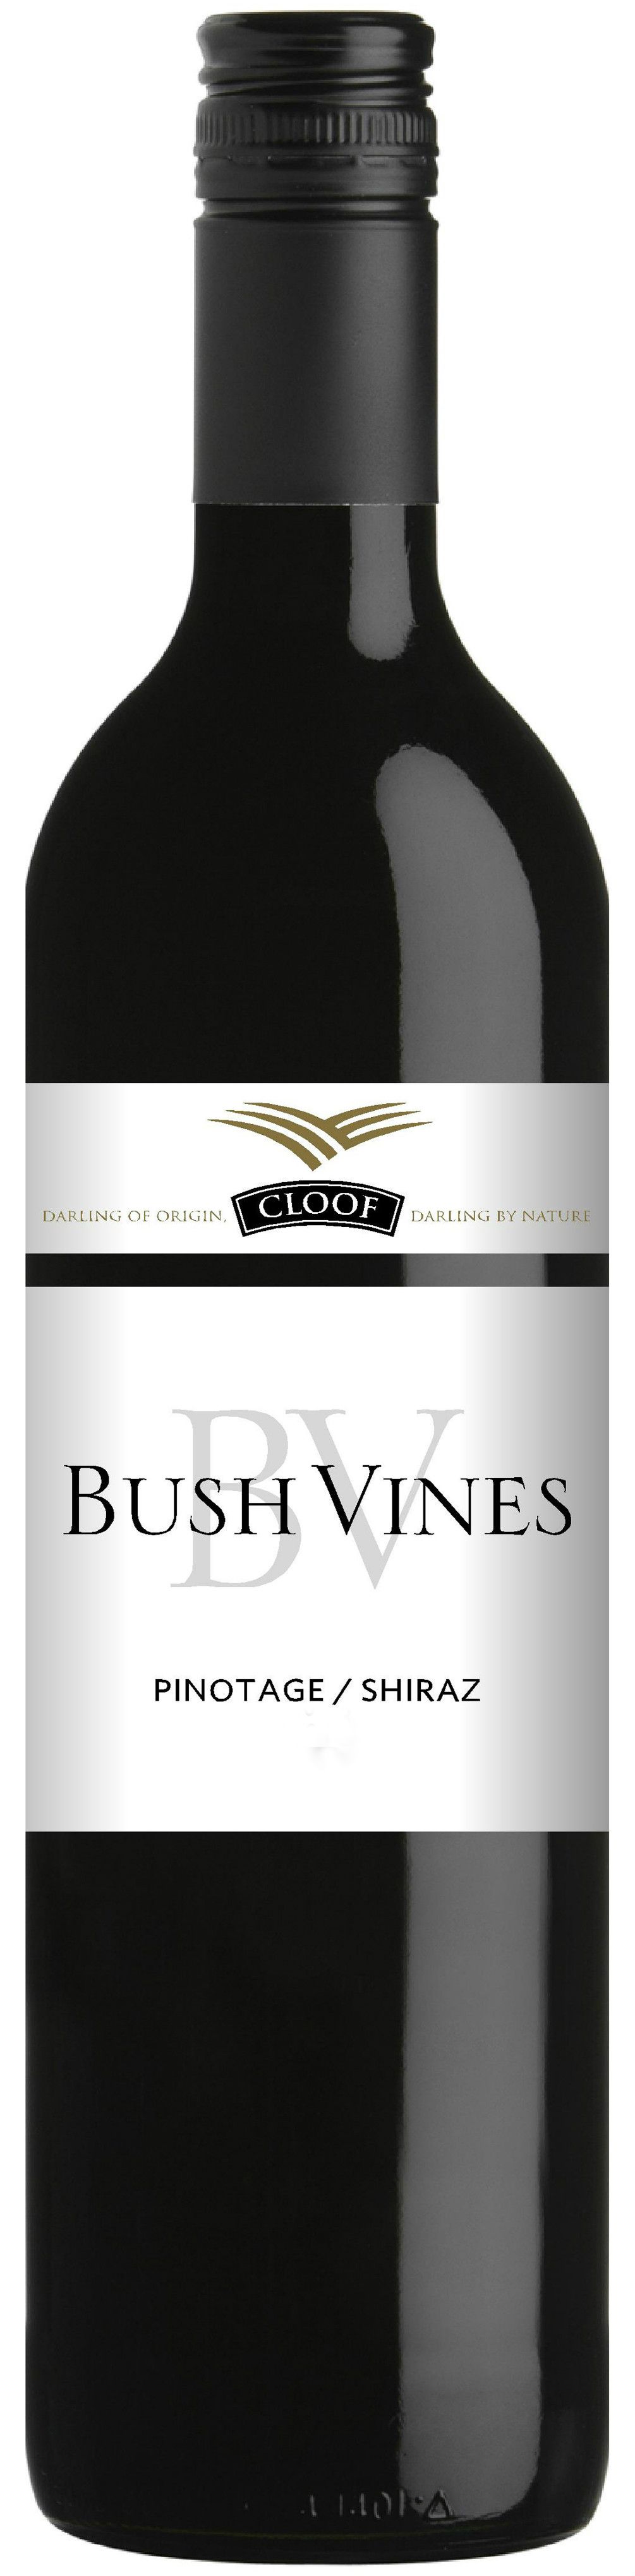 Cloof, Bush Vines Pinotage Shiraz, 2015